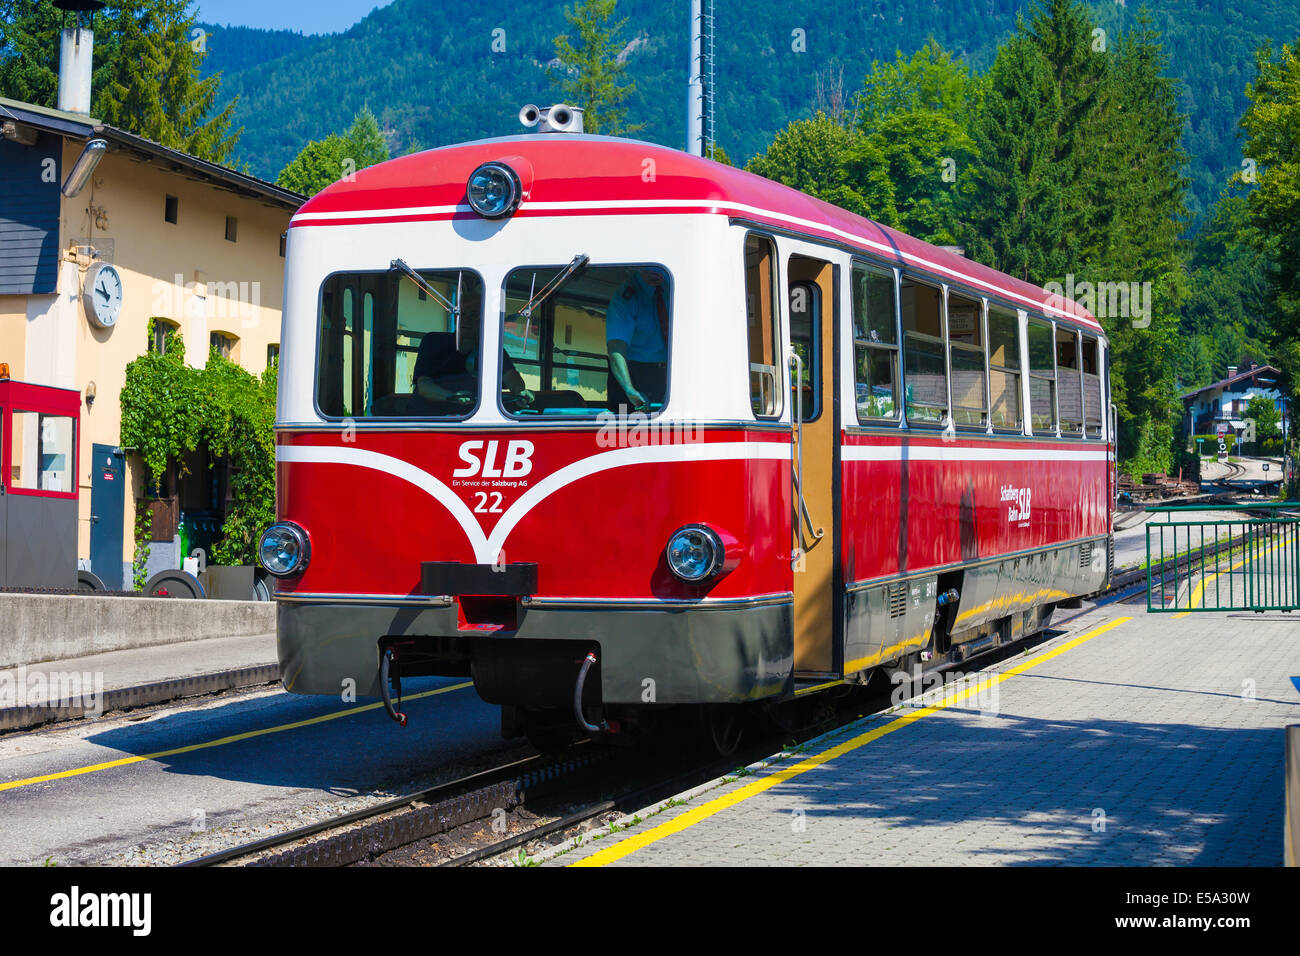 St. Wolfgang, Austria - August 6, 2014: Diesel locomotive of a vintage cogwheel railway going to Schafberg Peak (1783m) Stock Photo